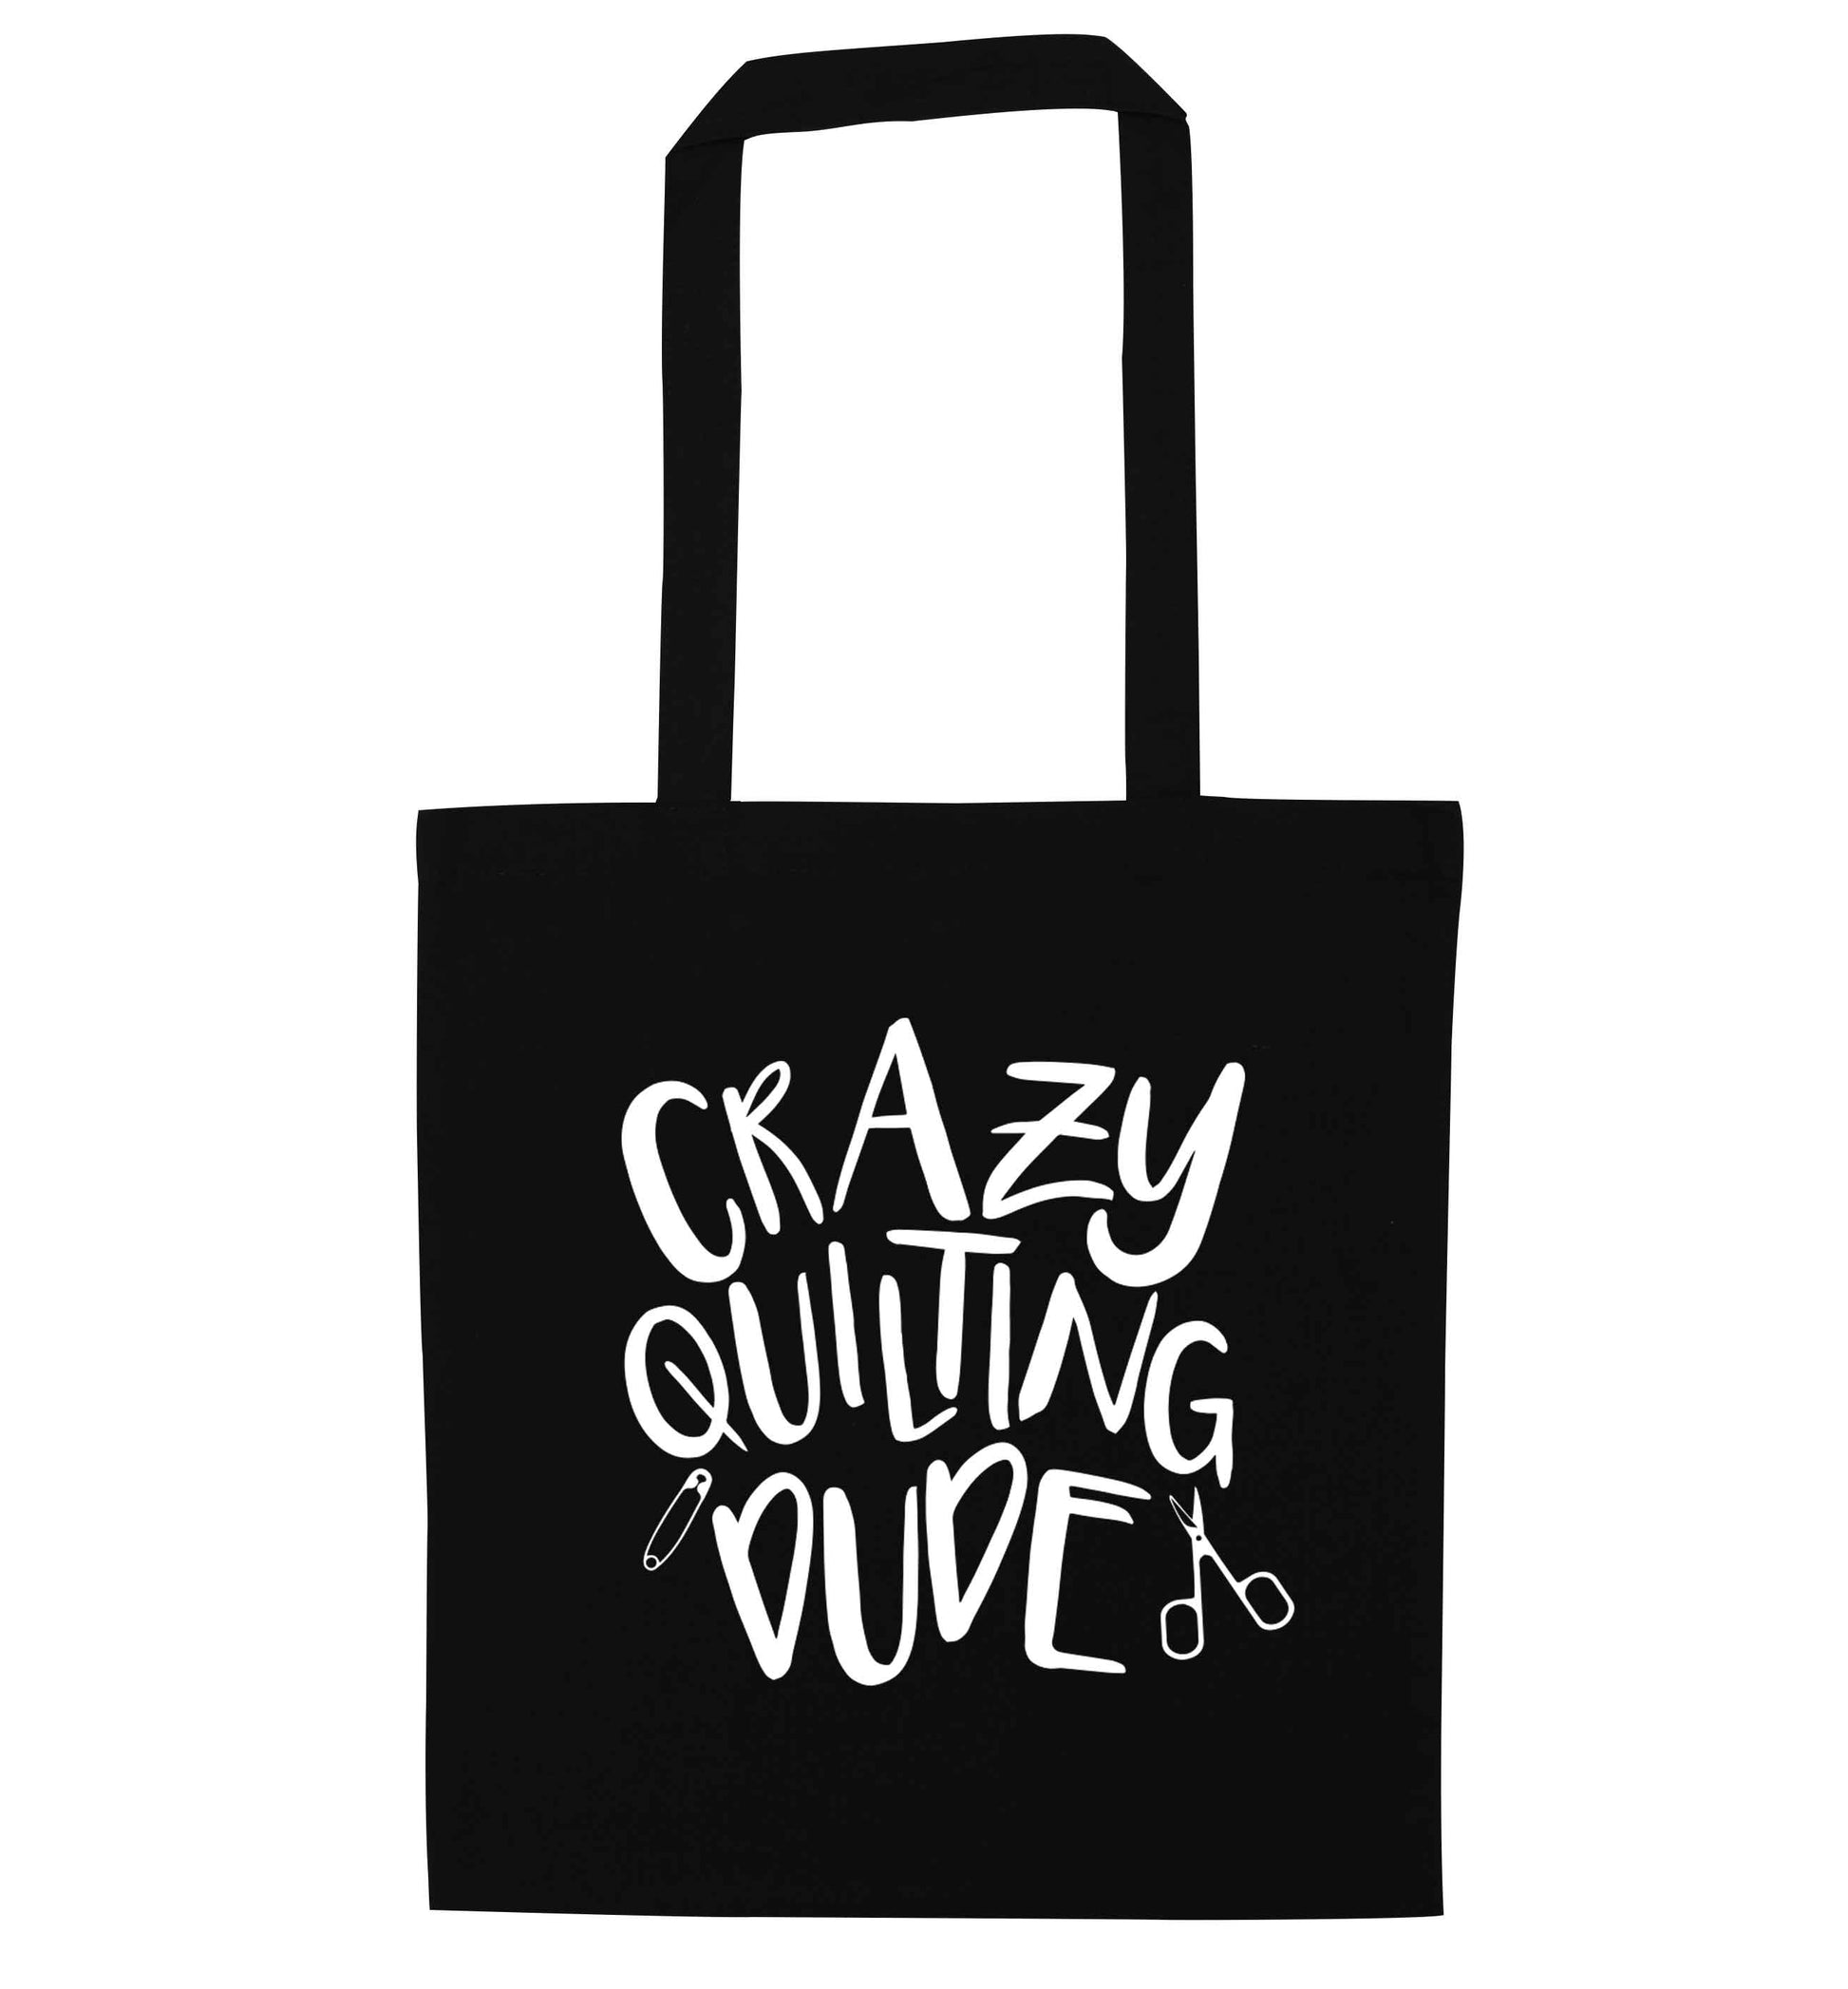 Crazy quilting dude black tote bag